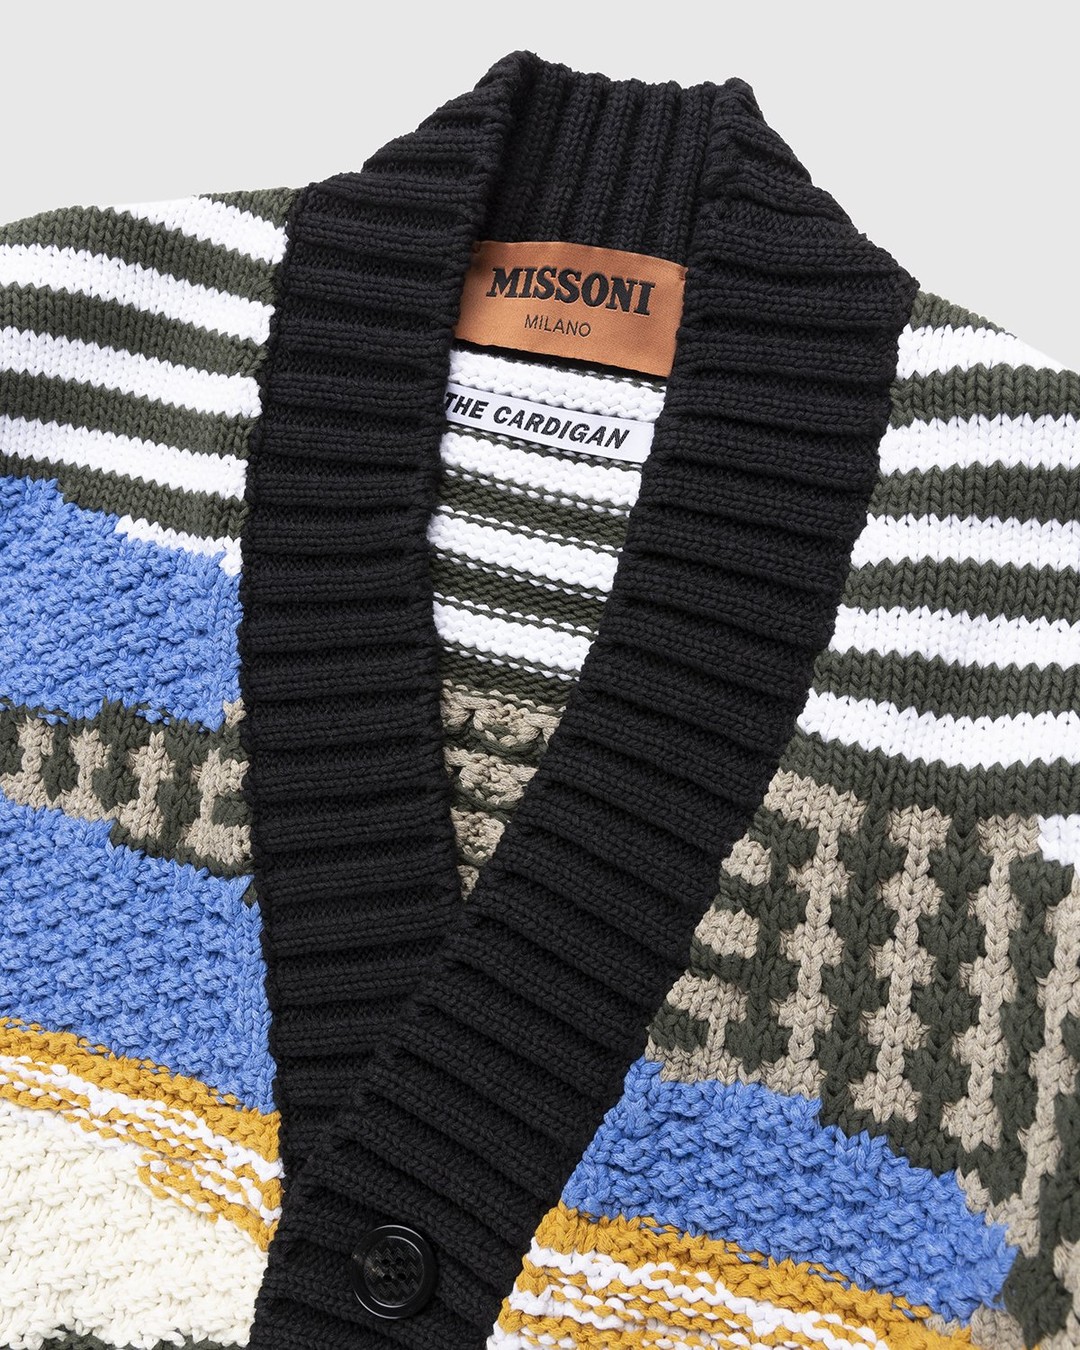 Missoni – Intarsia Cardigan Multicolor - Knitwear - Multi - Image 5